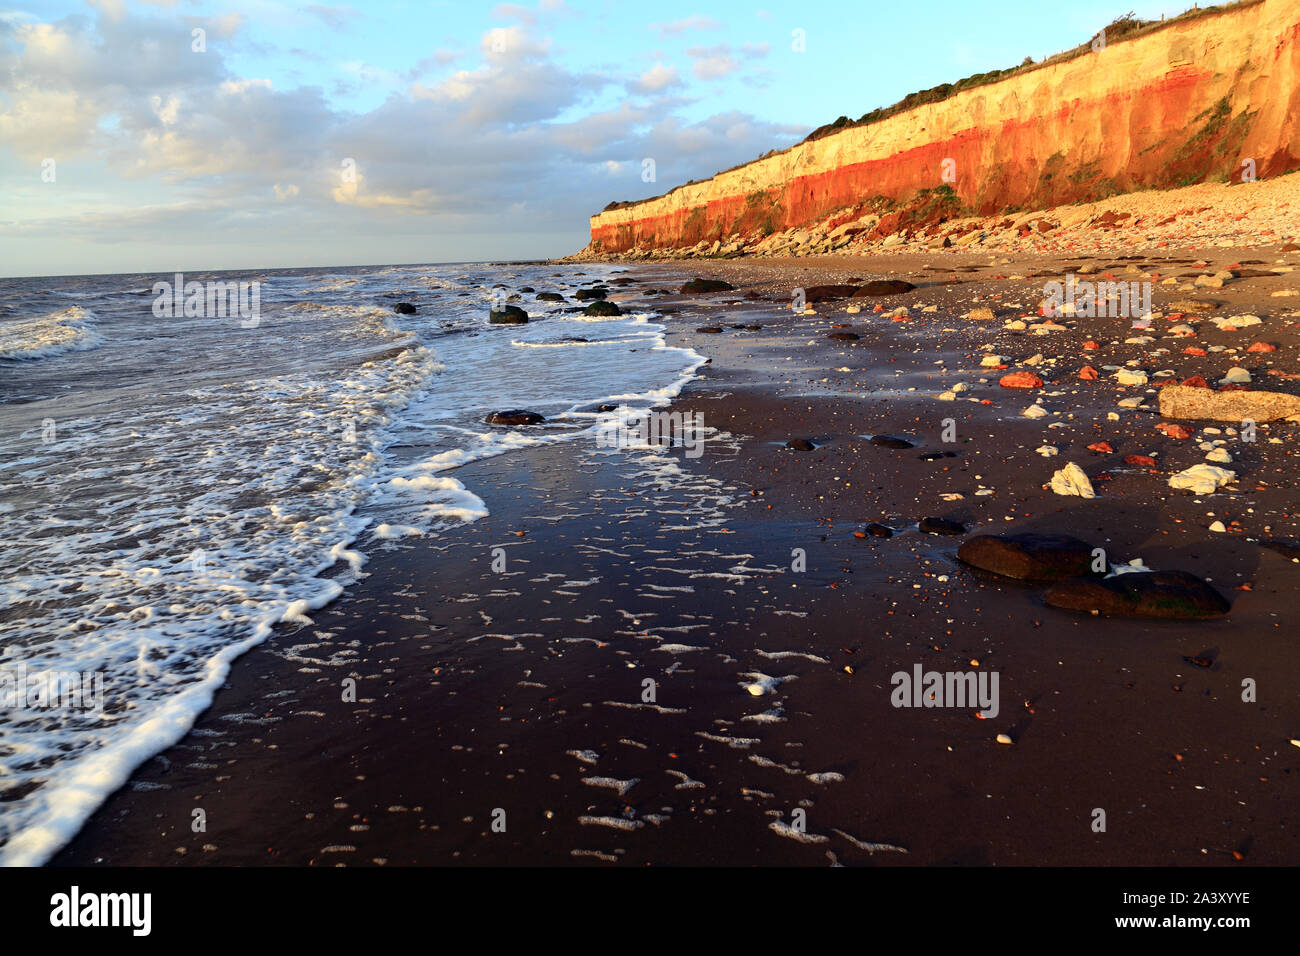 Old Hunstanton, striped cliffs, beach, The Wash, North Sea, Norfolk, England. Stock Photo